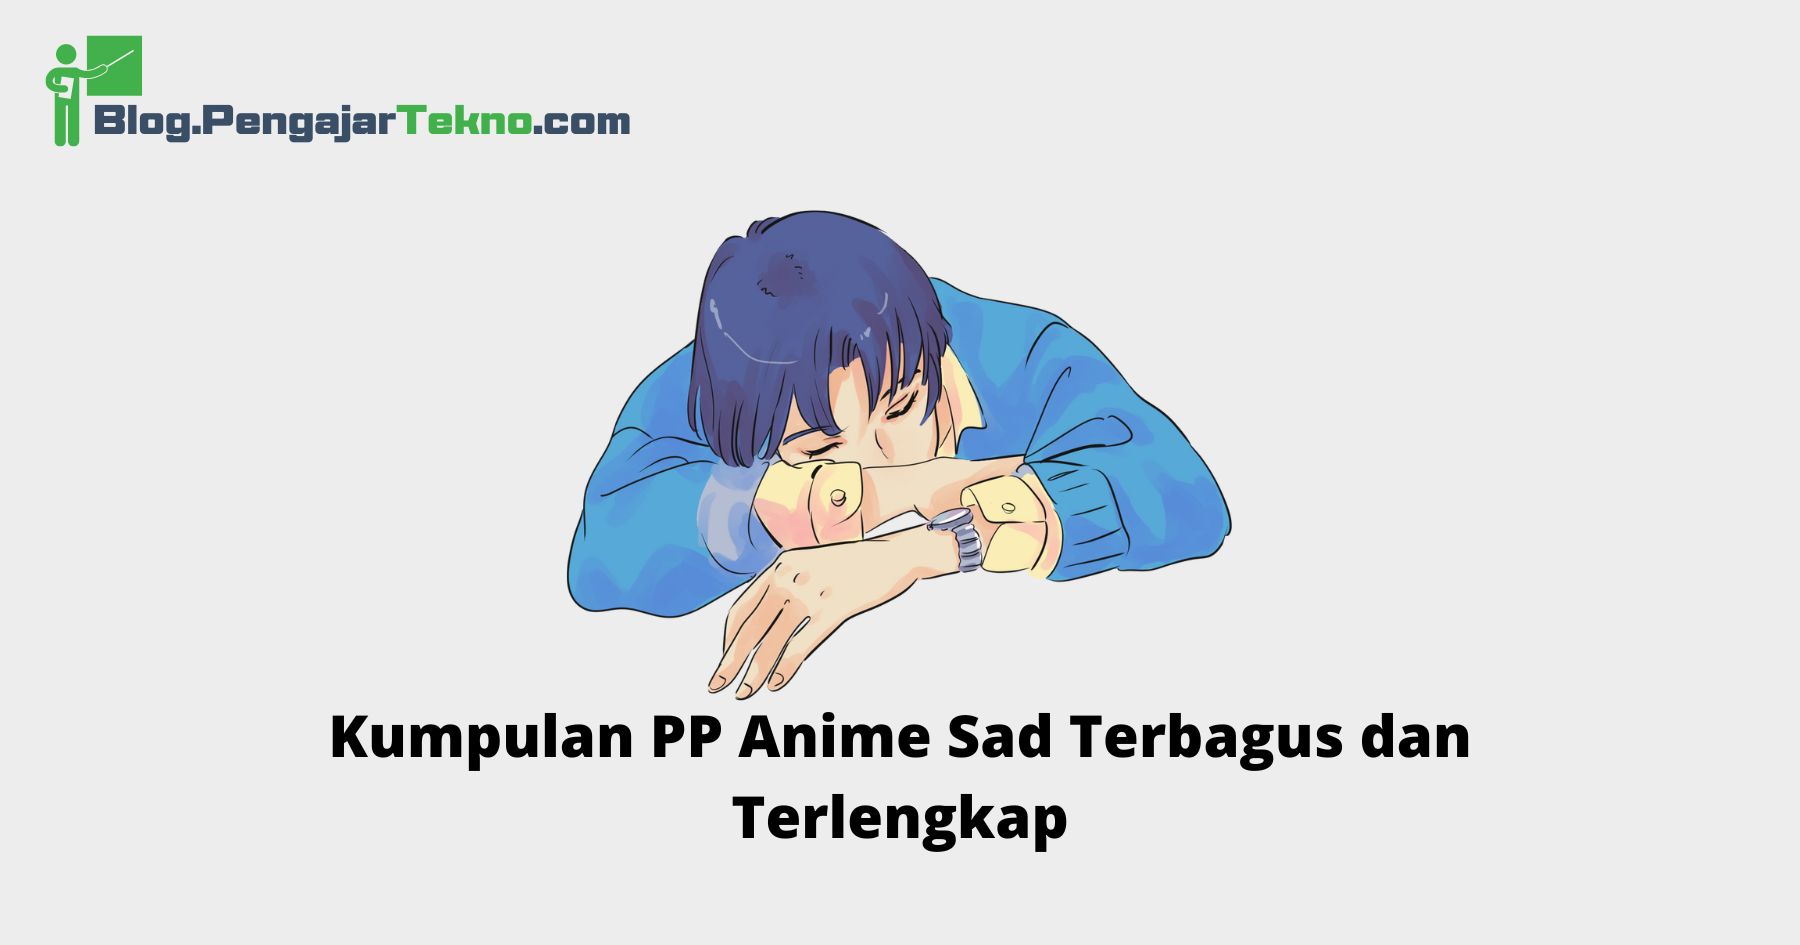 pp anime sad